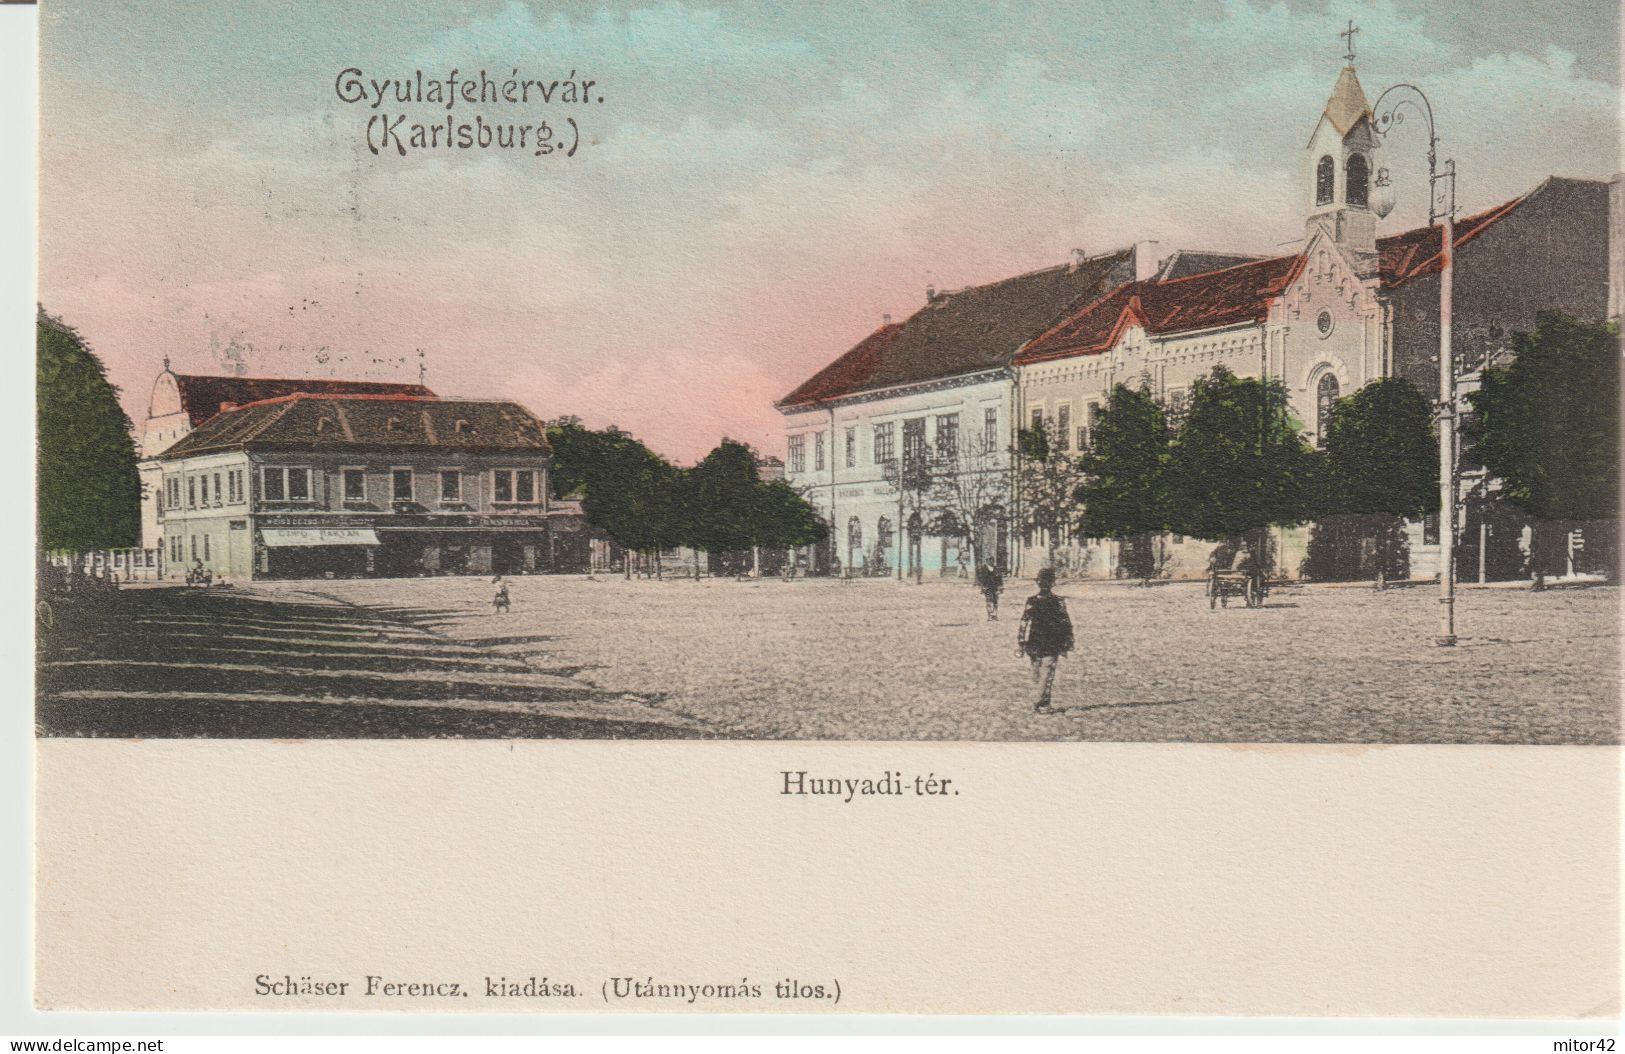 2*-Tassate-Segnatasse-Tassata Da Estero: Ungheria X Francia-Cartolina Di Gyulafehervar (Karsburg)-1921 - Taxe